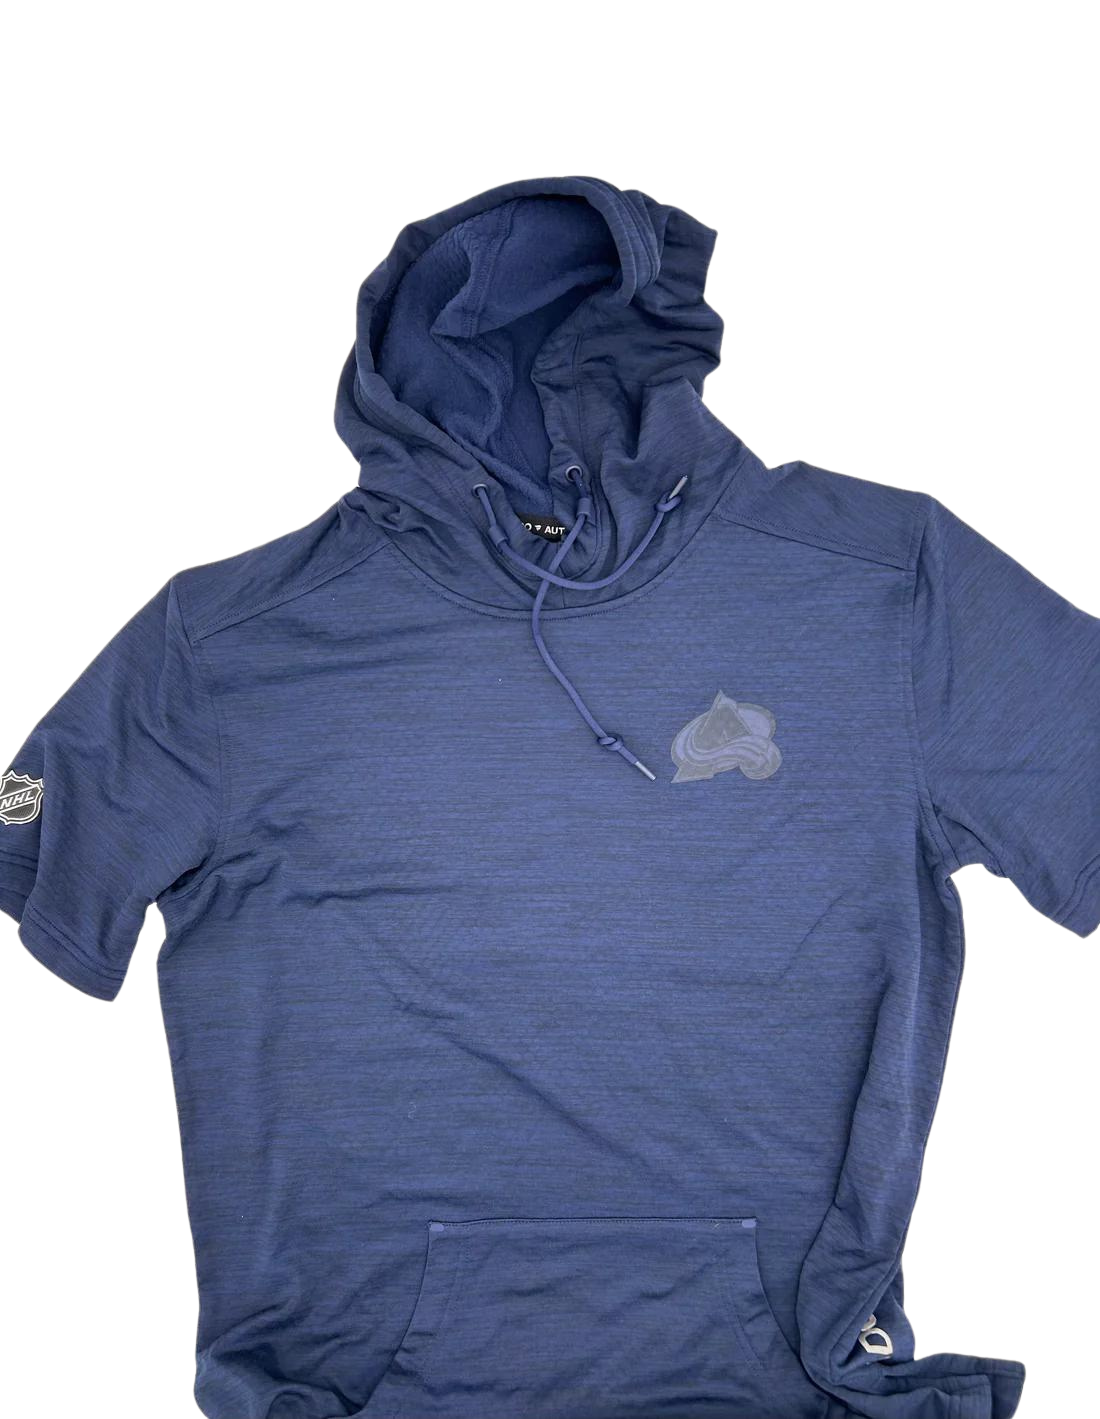 New Colorado Avalanche Blue Fanatics 1/2 Sleeve Sweatshirt